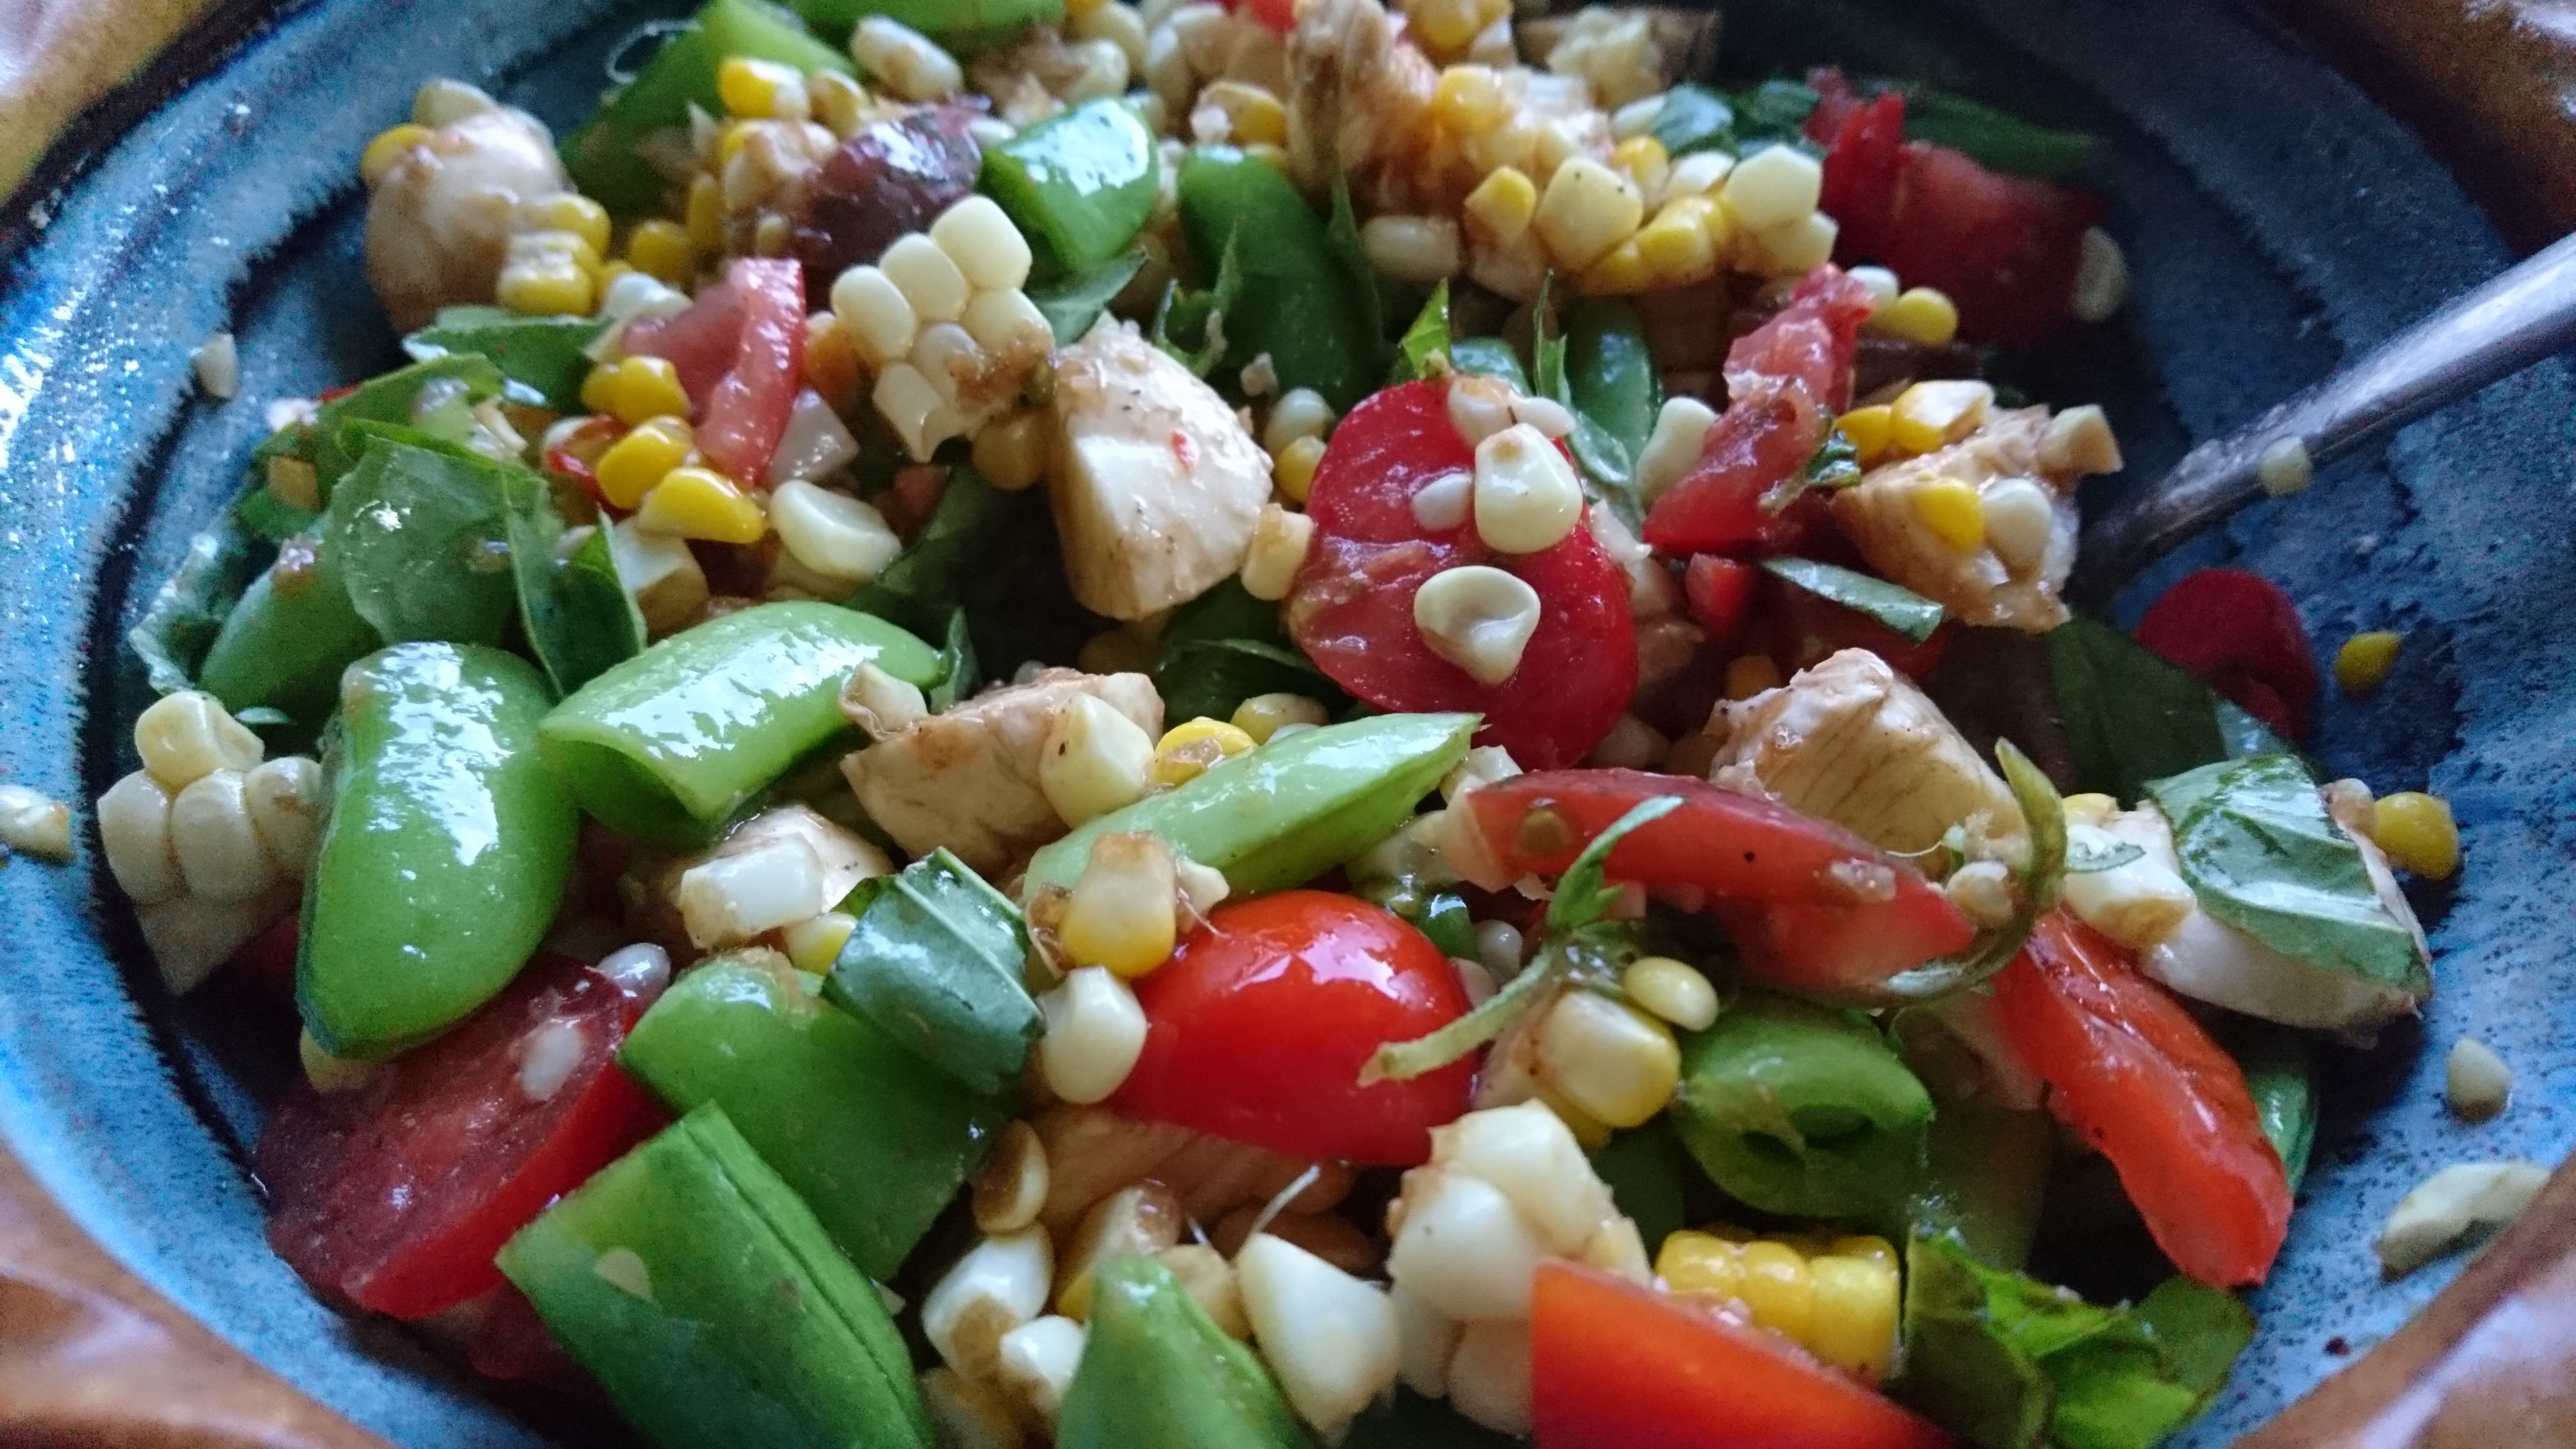 snap pea, tomato, and corn salad in a ceramic bowl